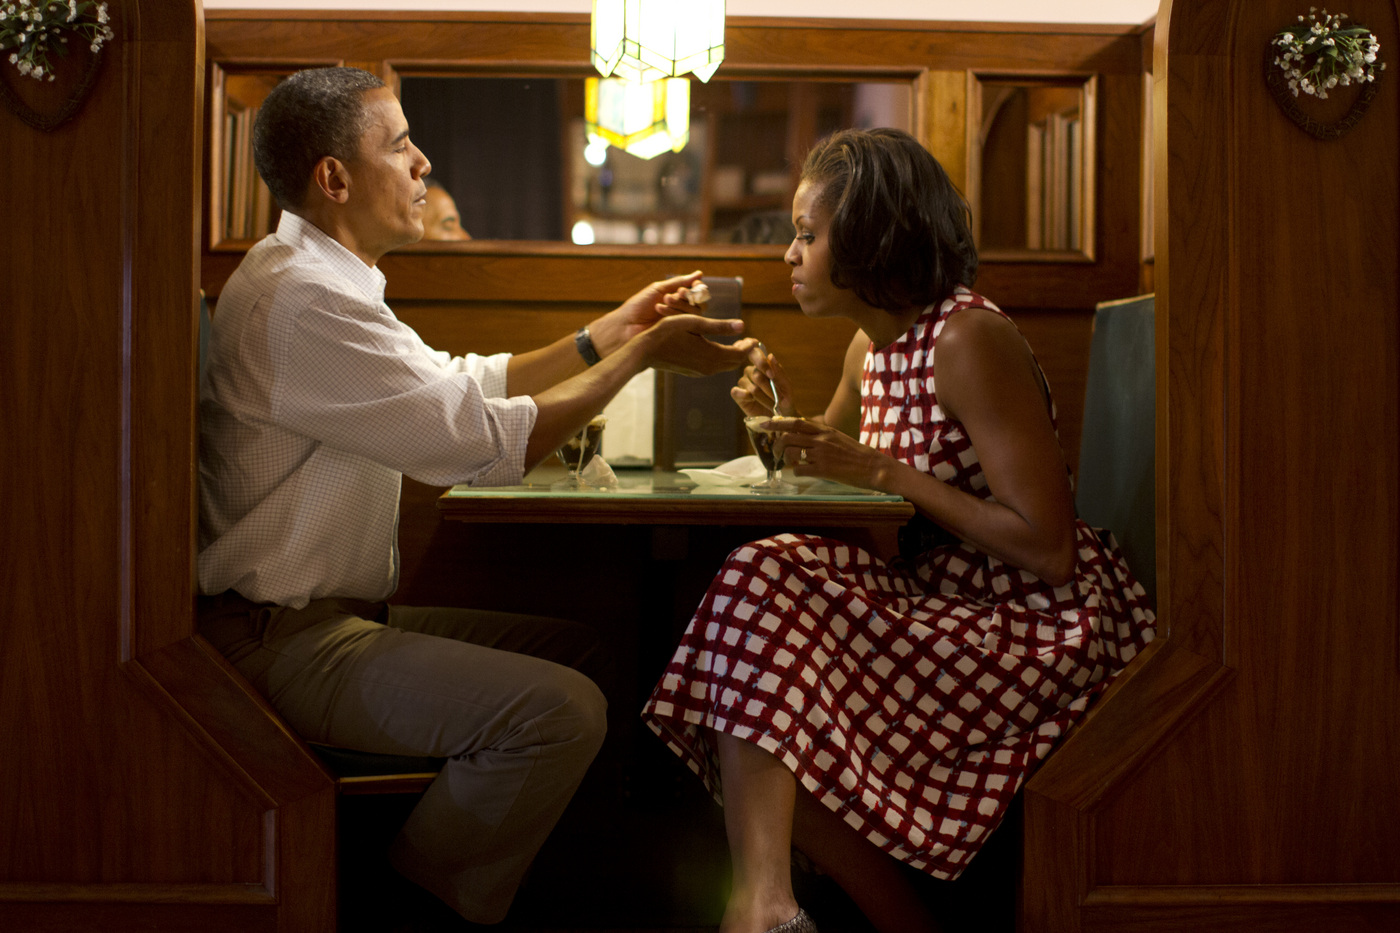 The First Couple shares a First Sundae - Iowa / 2012 : The Presidents  : David Burnett | Photographer